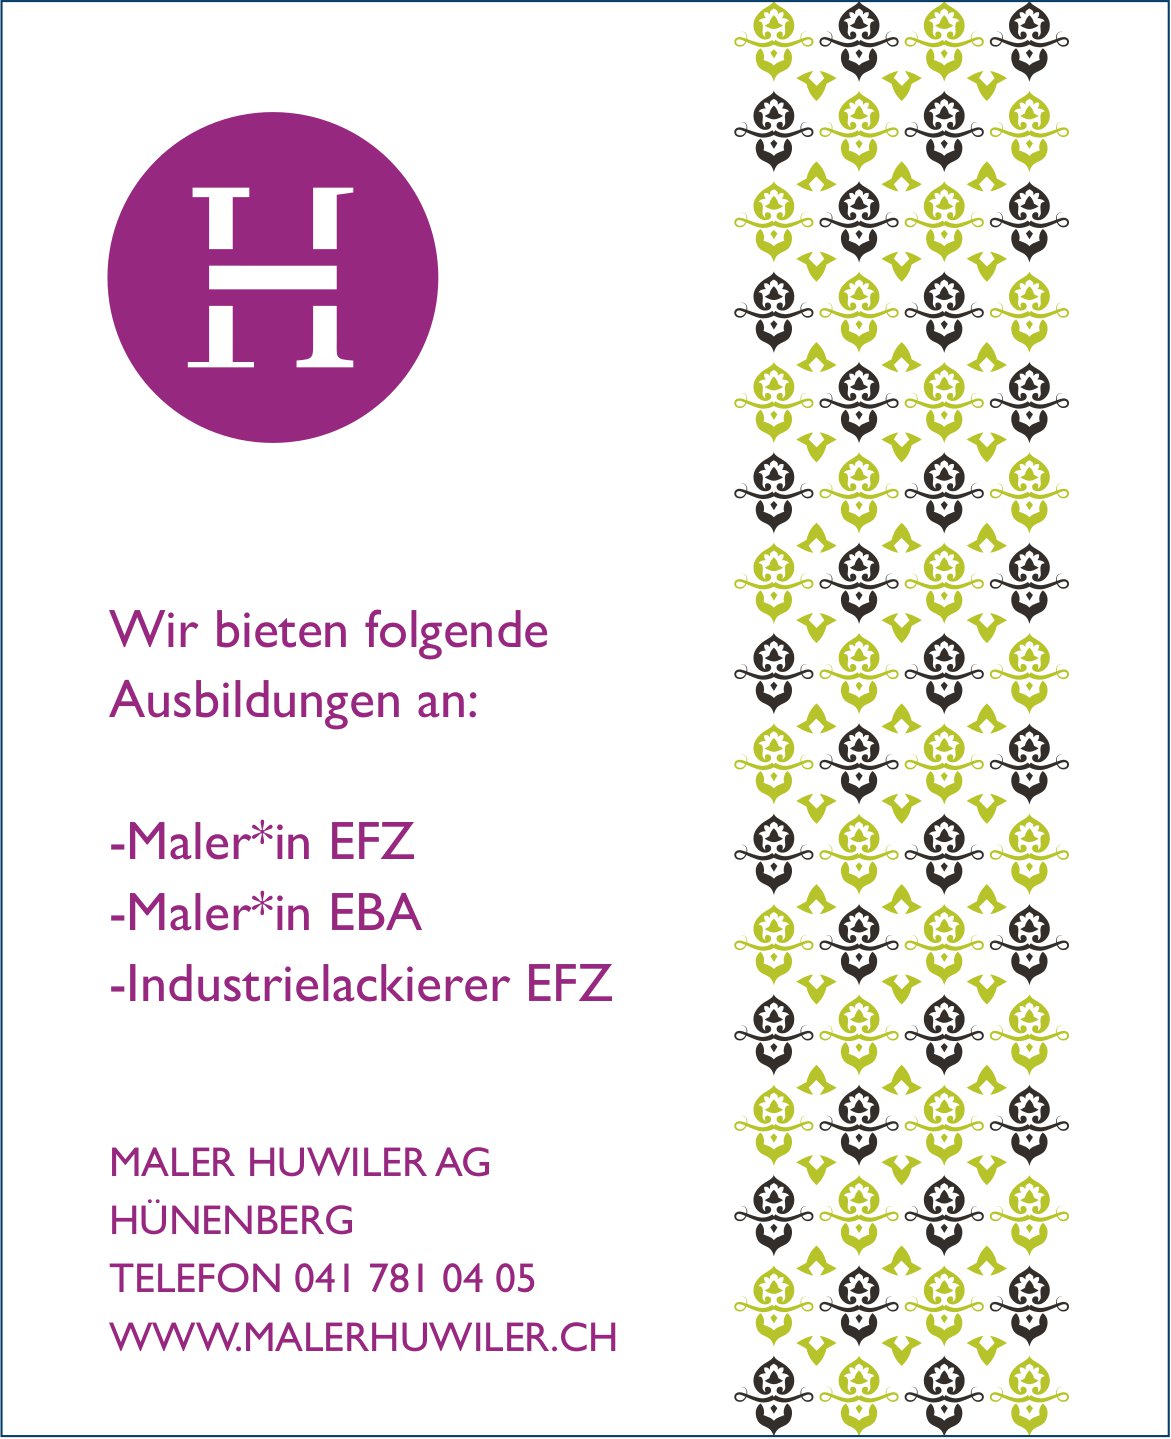 MALER HUWILER AG, Hünenberg - Wir bieten folgende Ausbildungen an: -Maler*in EFZ -Maler*in EBA -Industrielackierer EFZ